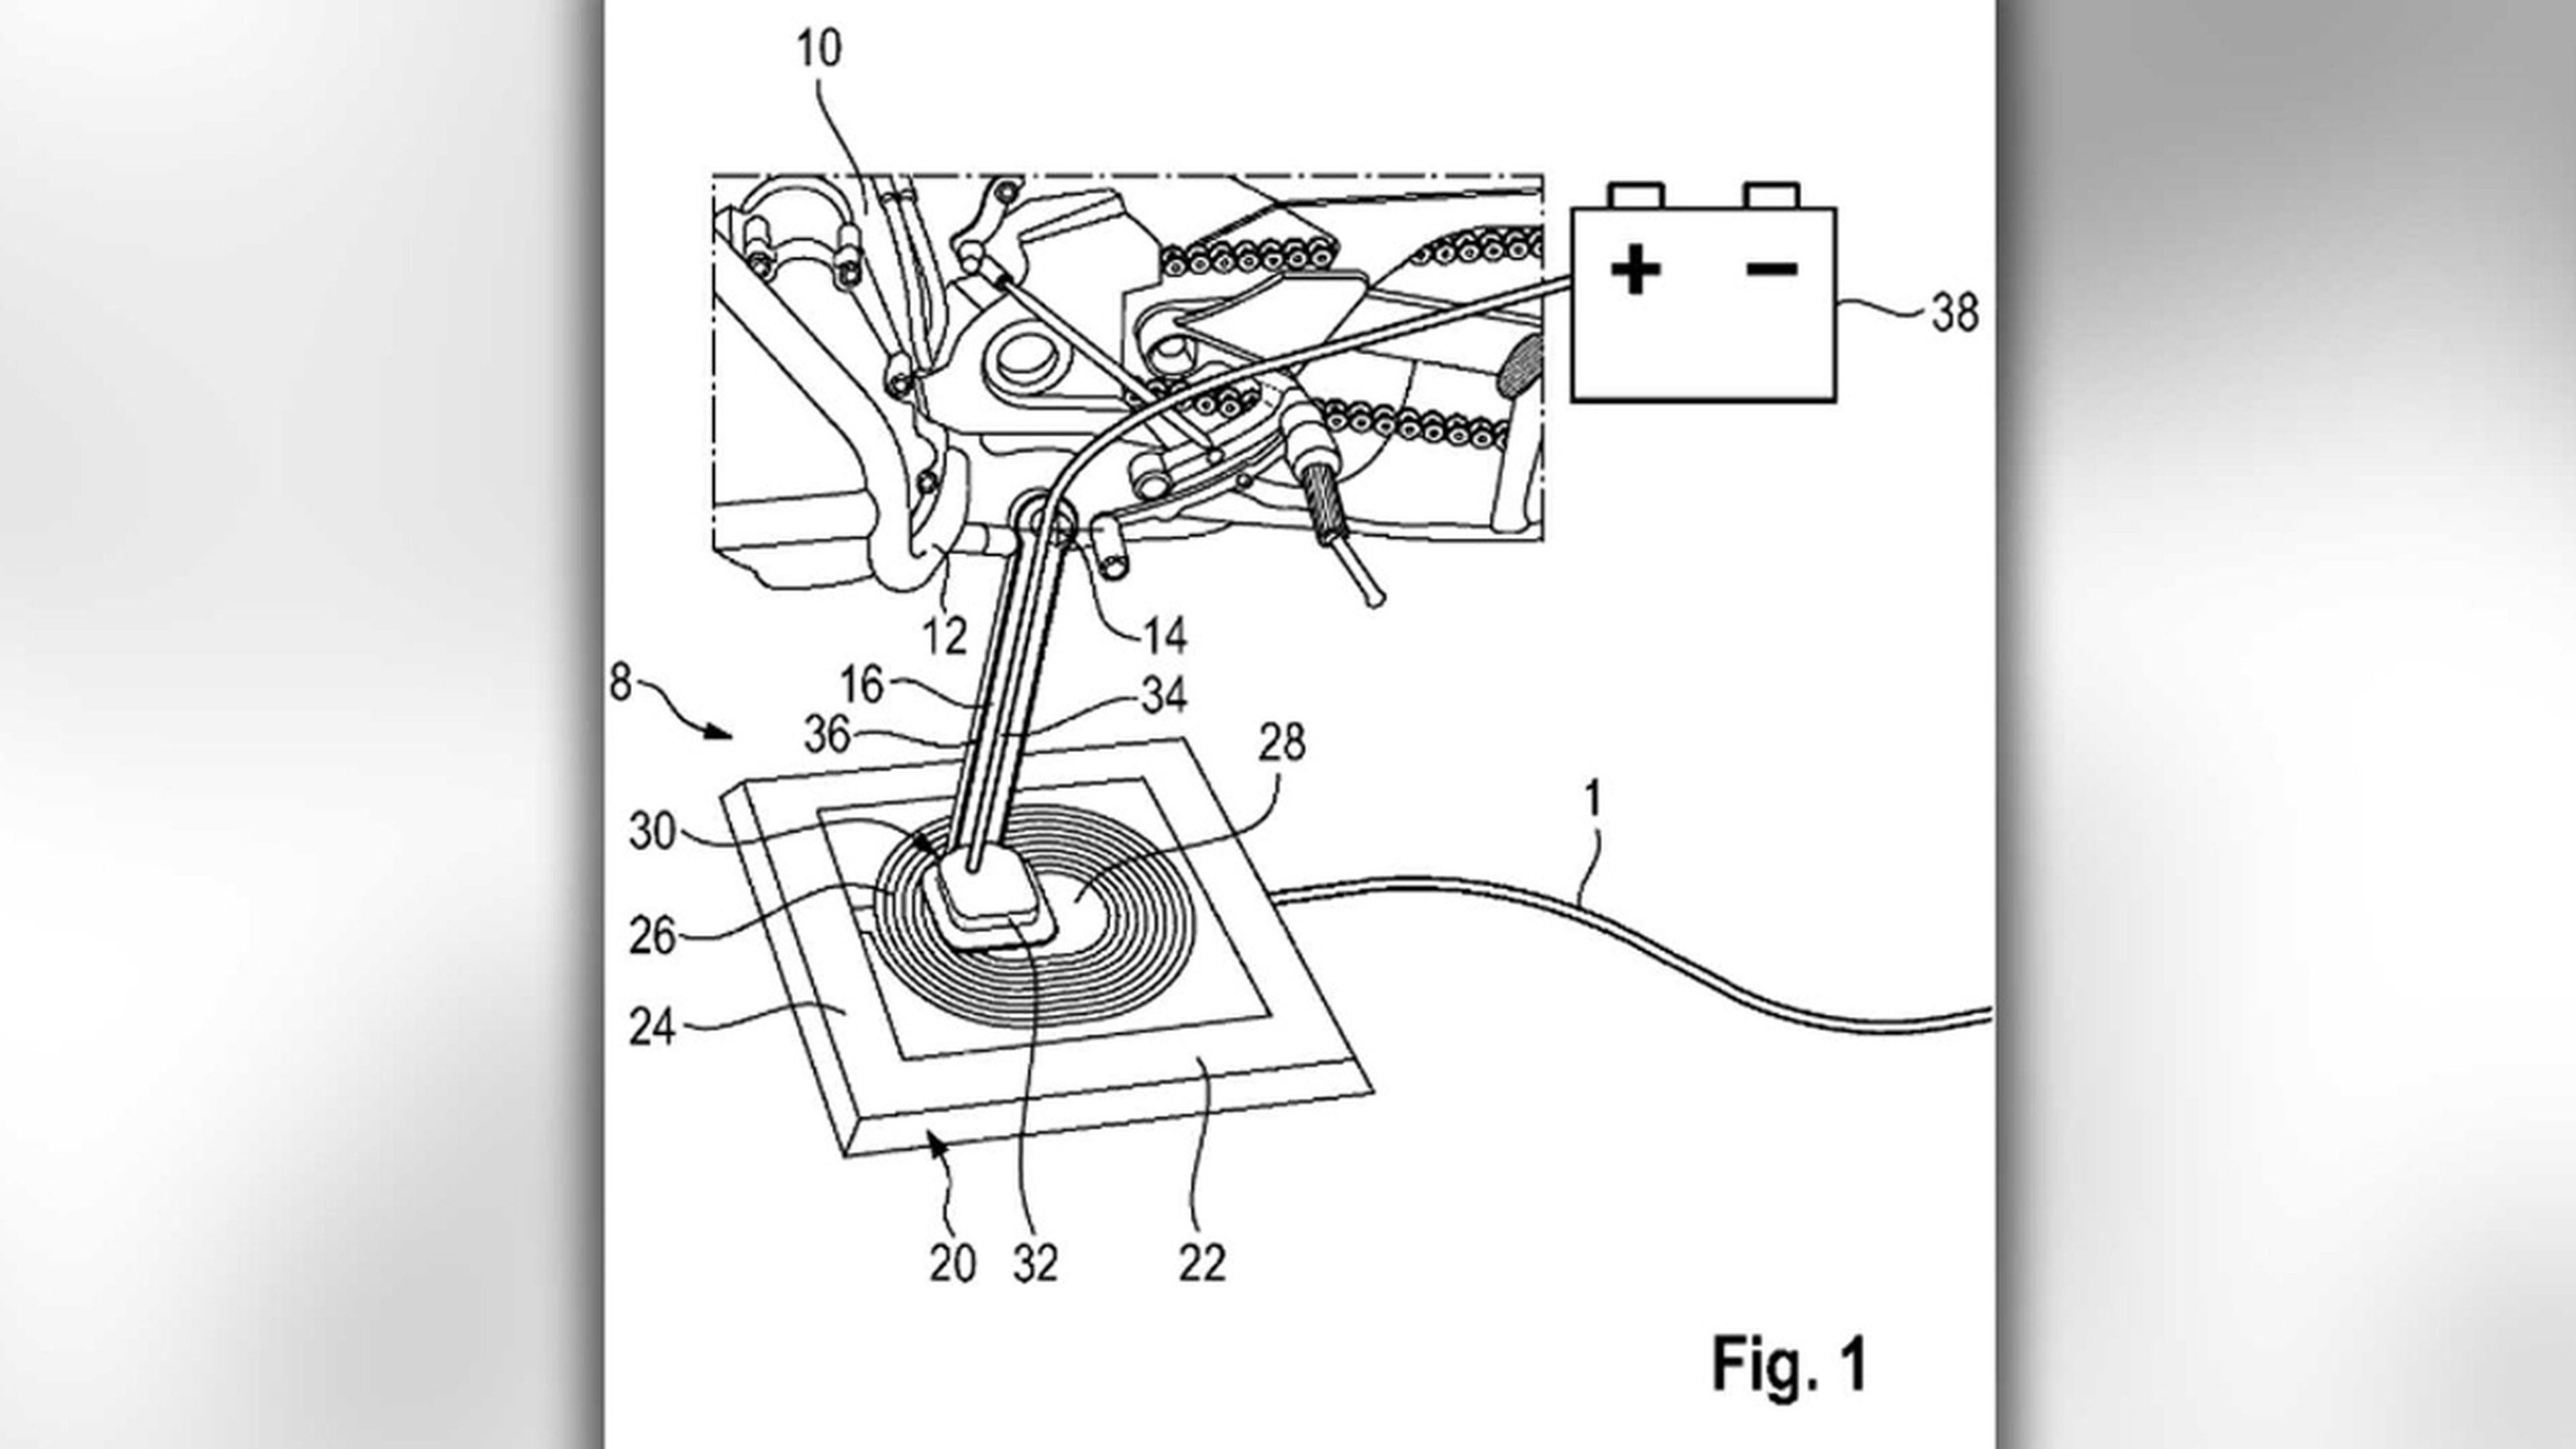 patente sistema carga inalambrica bmw motos electricas